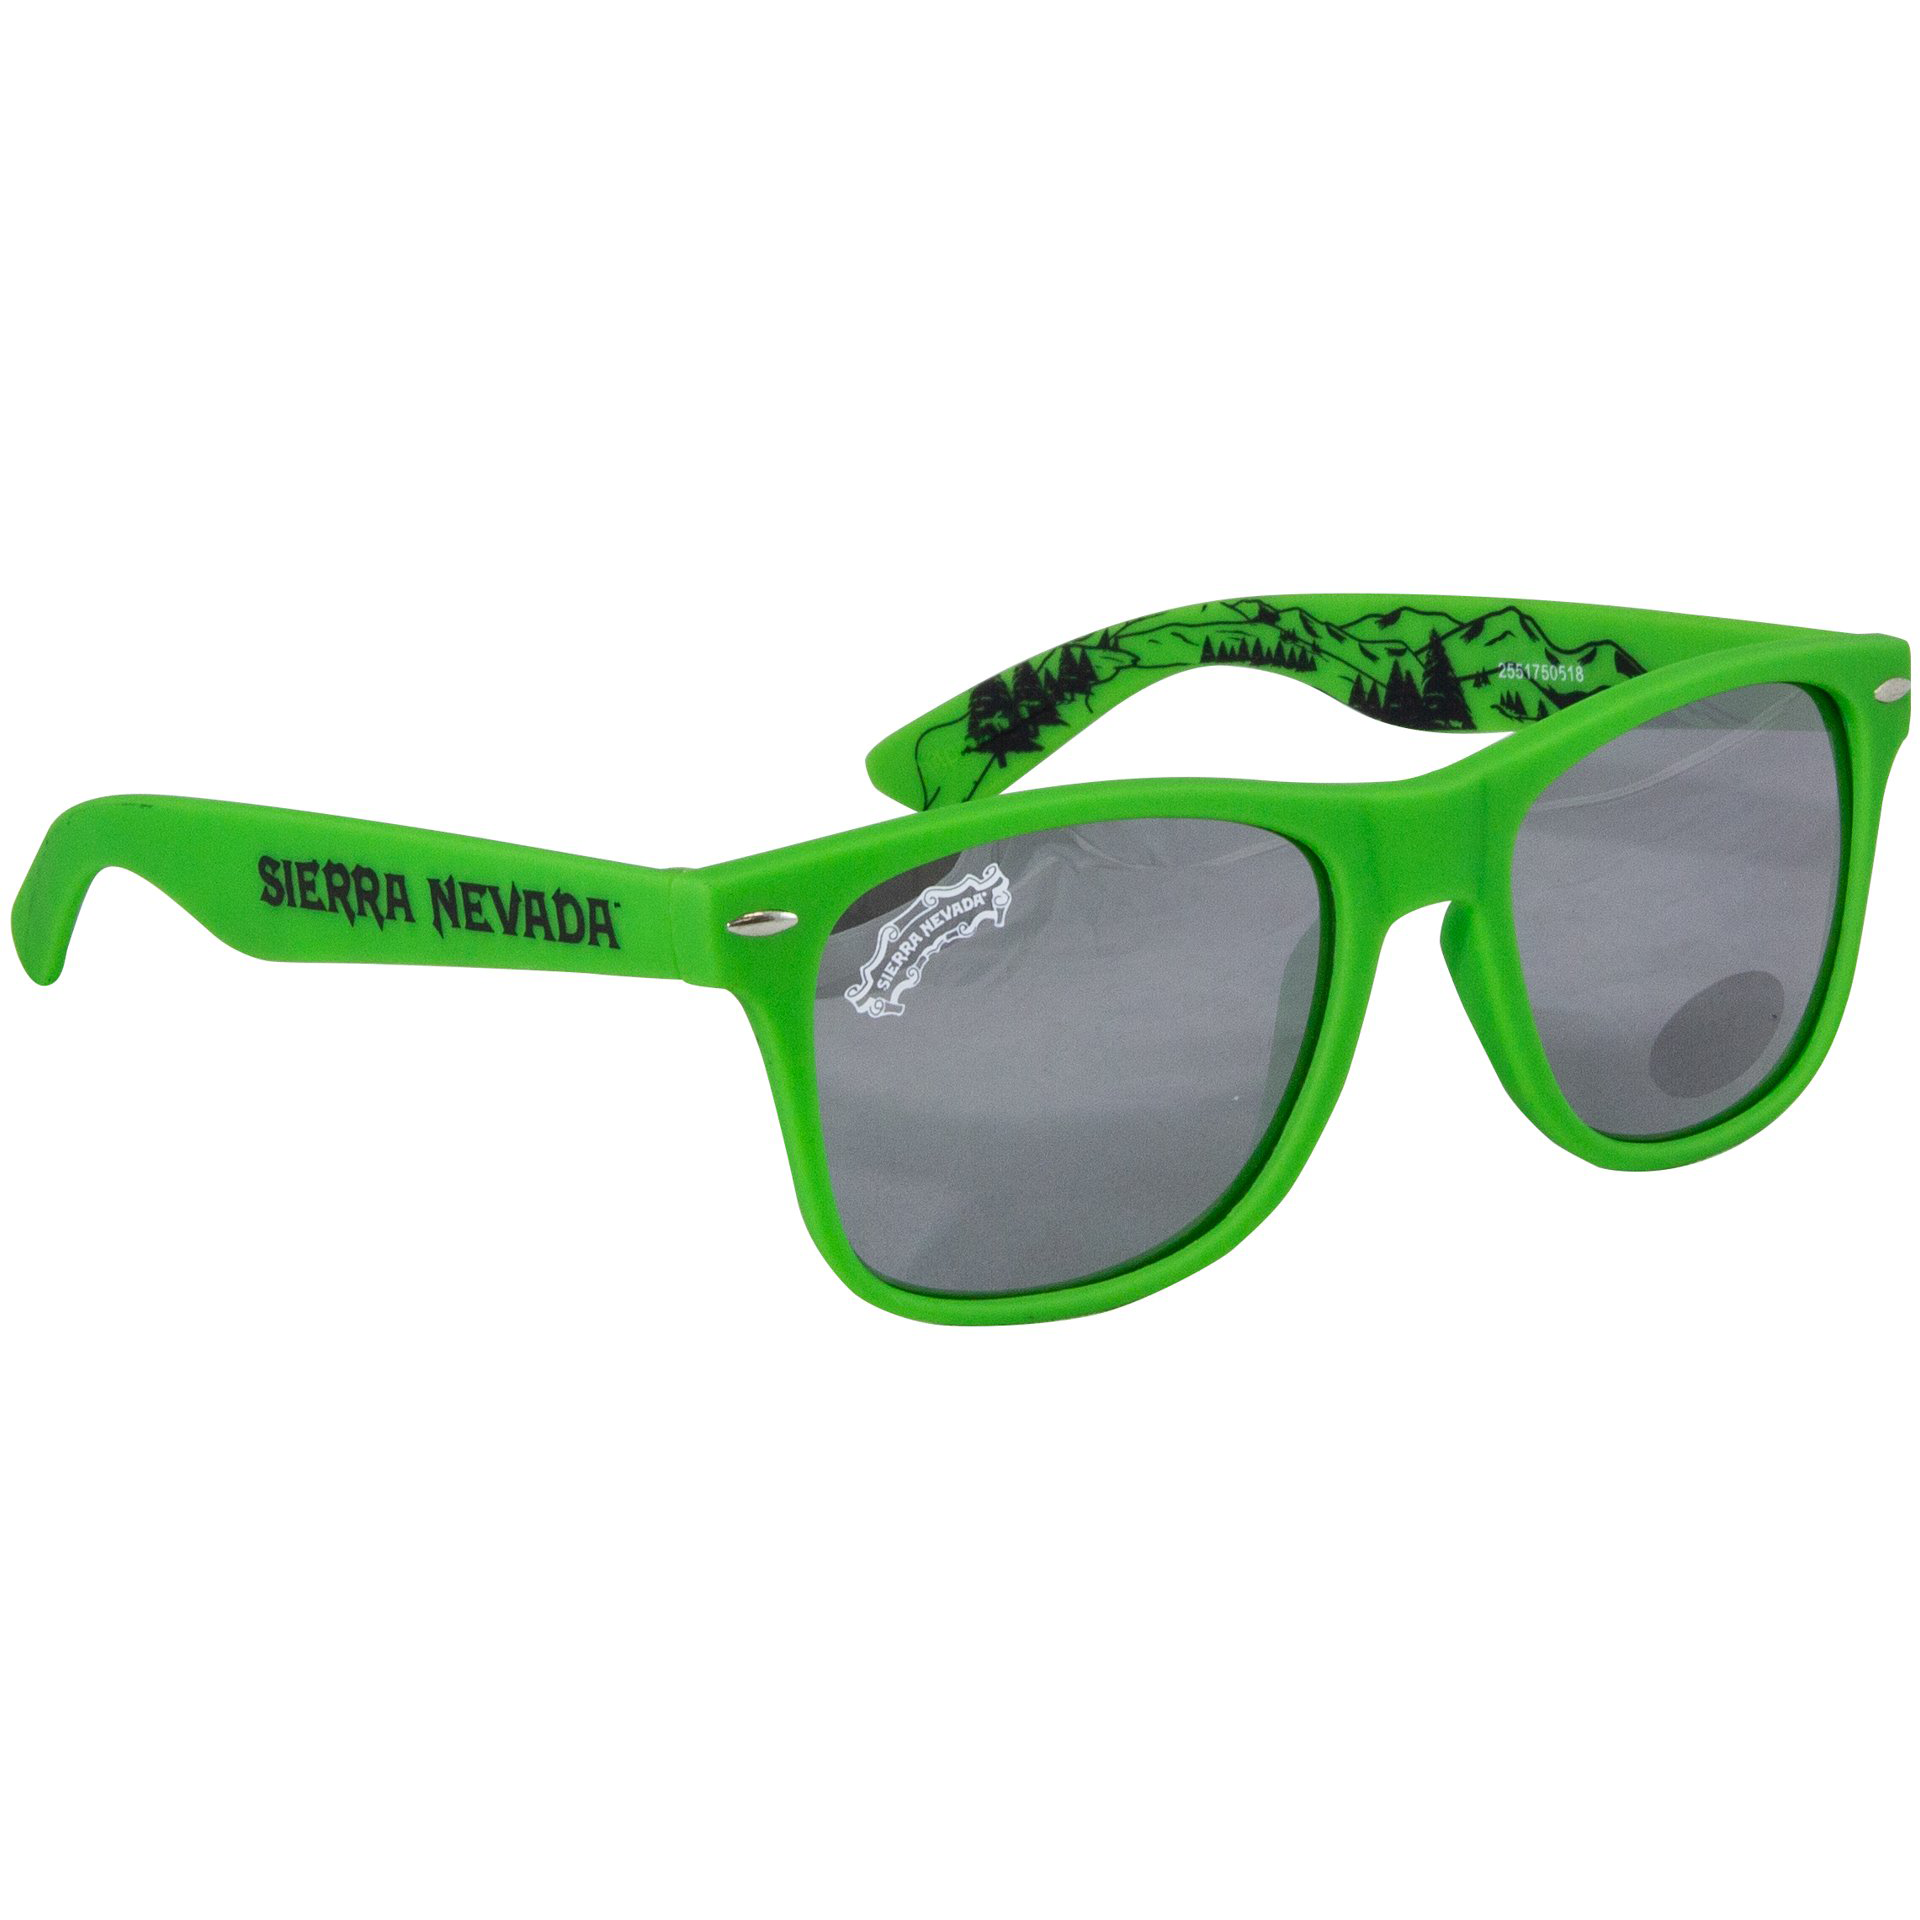 Sierra Nevada Green Pale Ale sunglasses